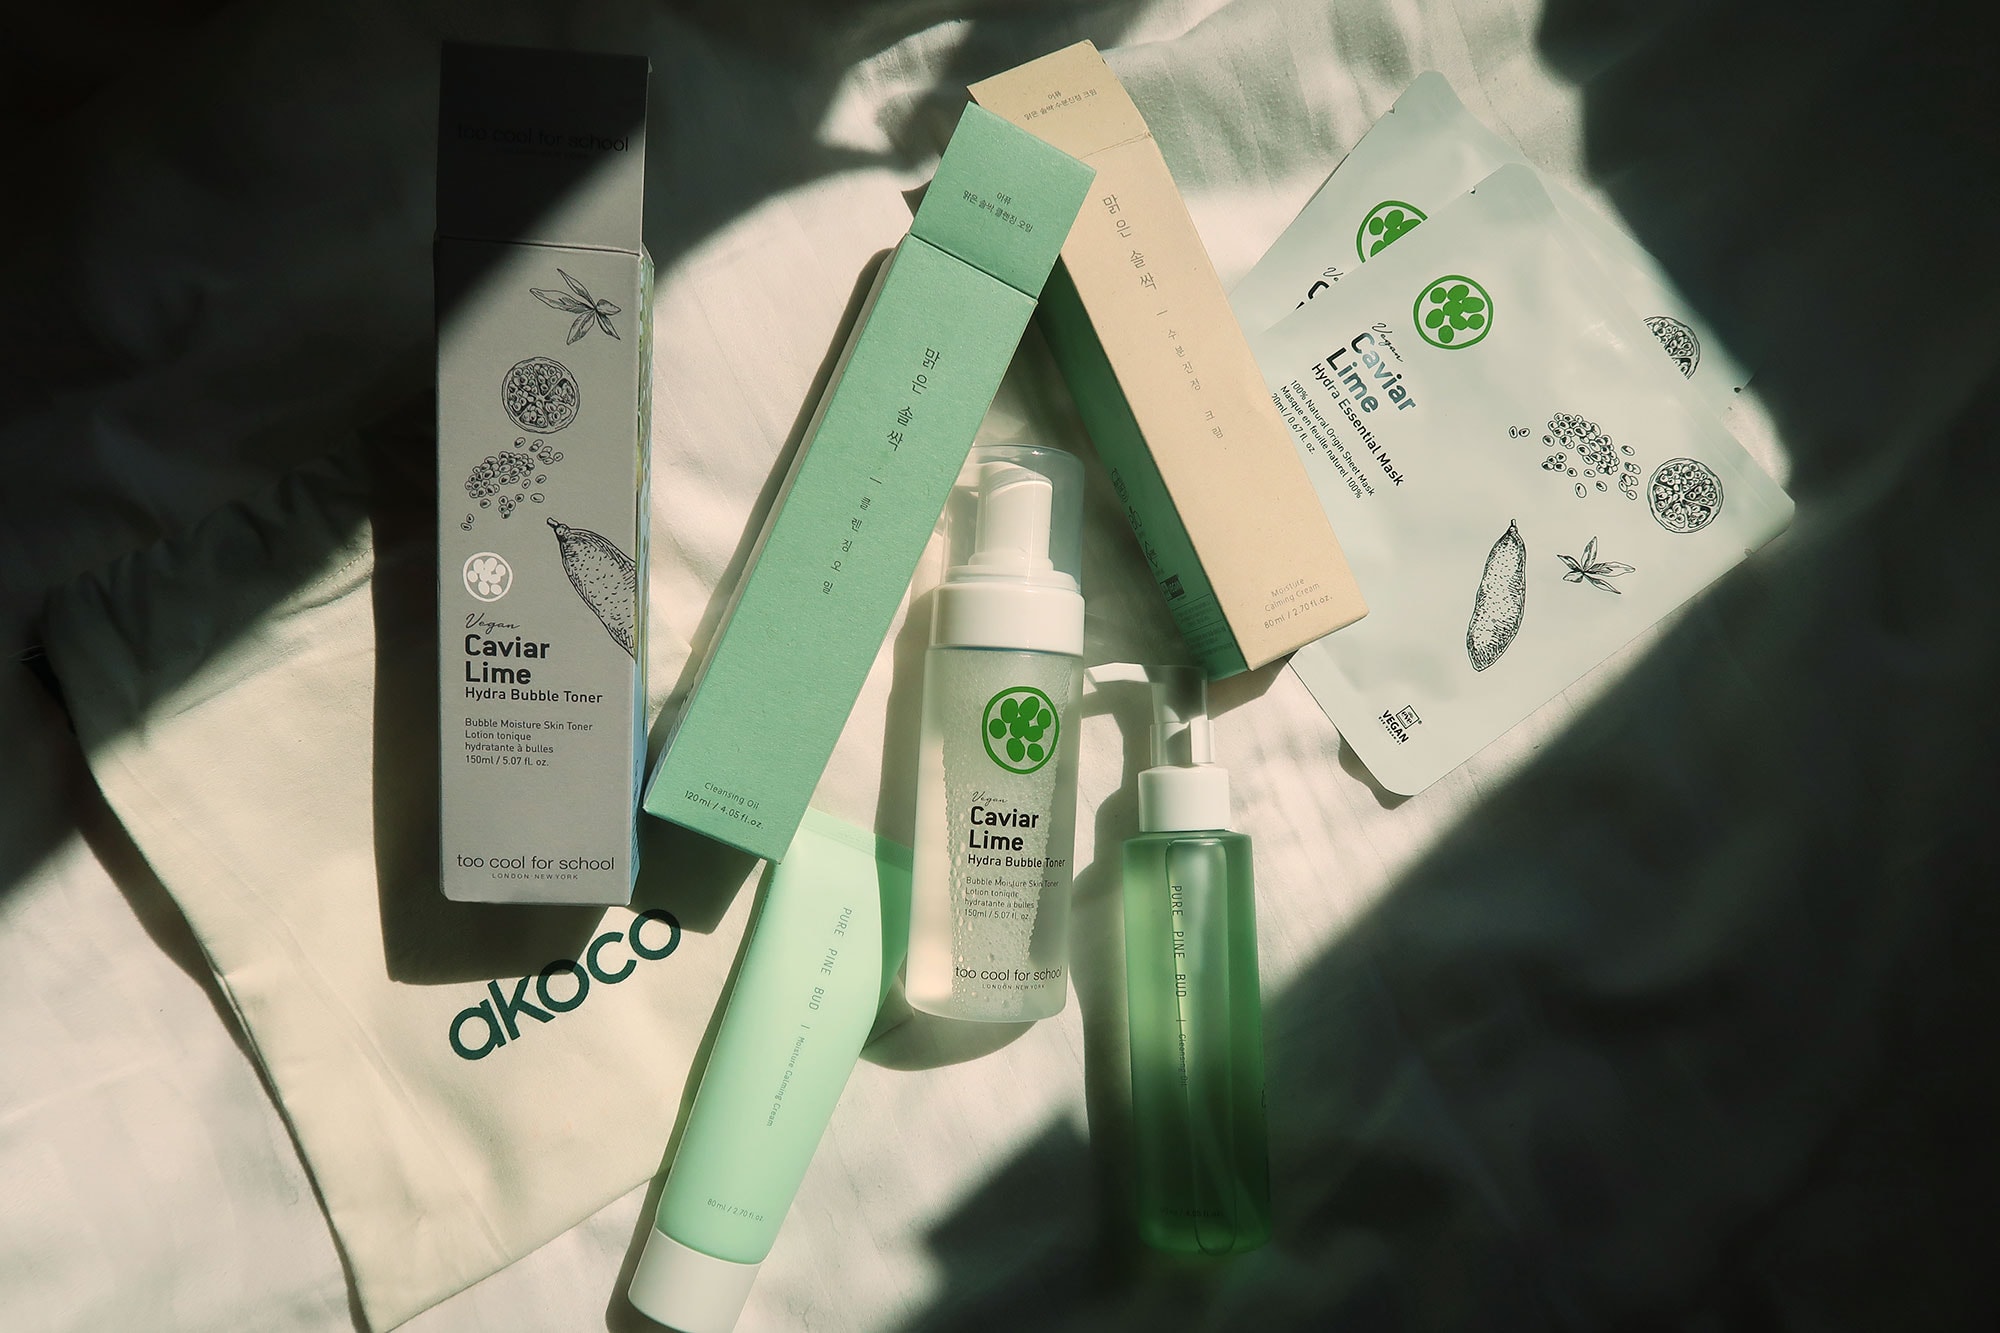 k-beauty skincare vegan akoco set too cool for school apieu toners cleansing oils masks creams clean 